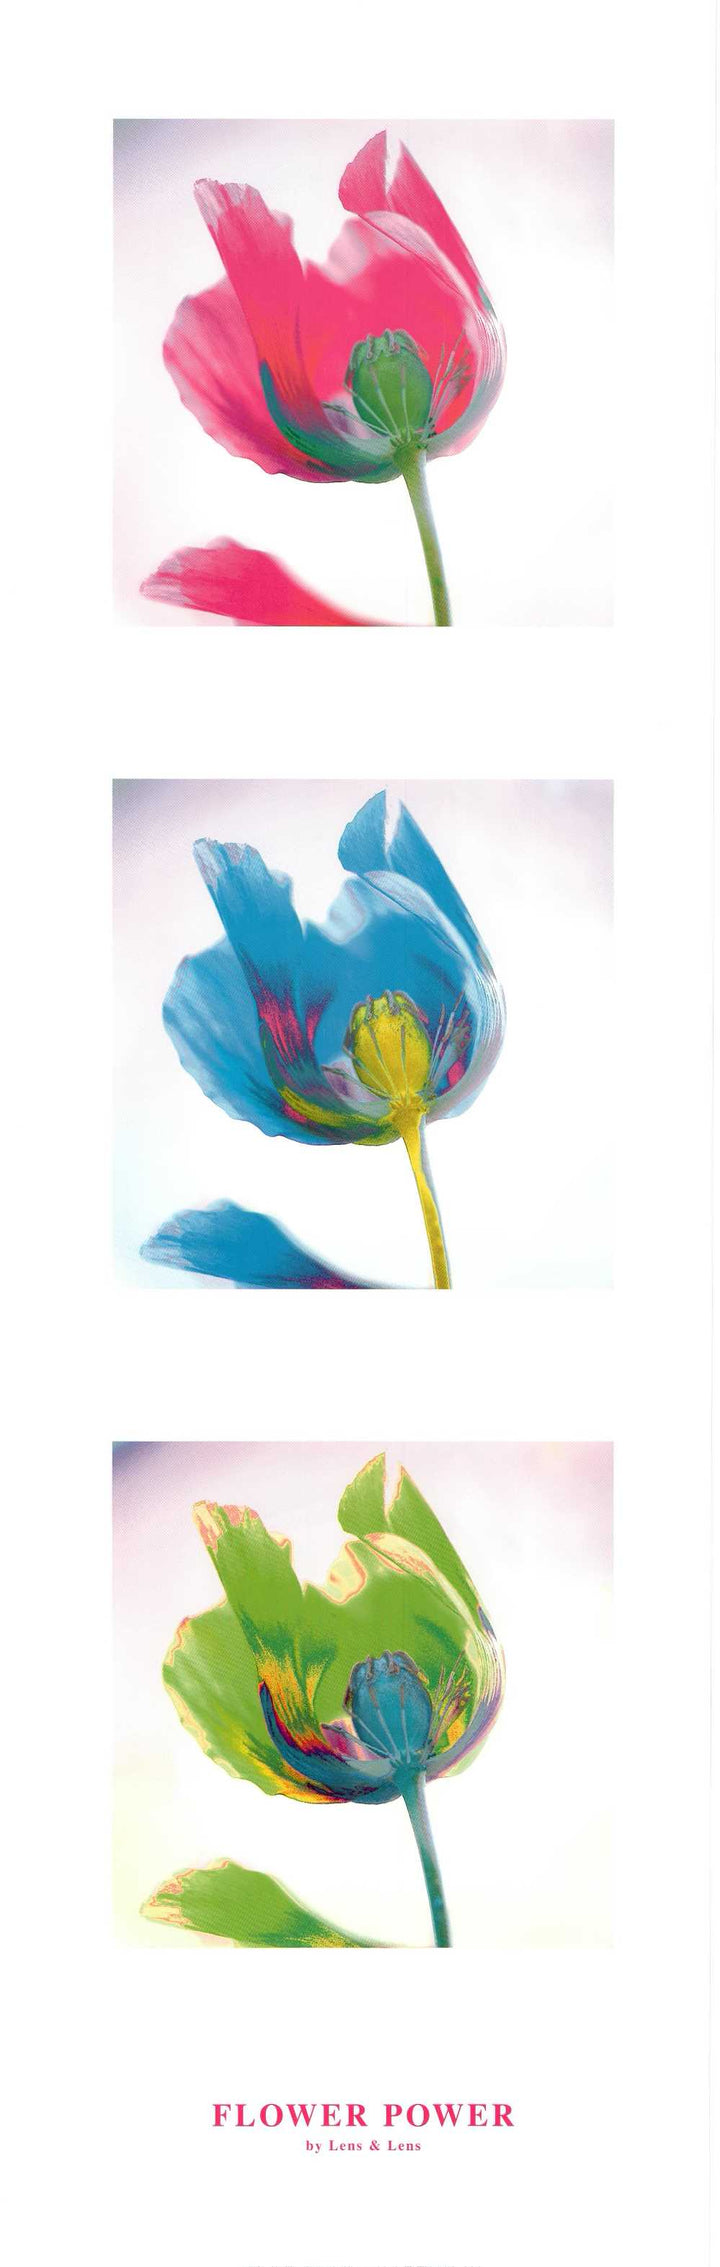 Flower Power by Lens & Lens - 12 X 36 Inches (Art Print)